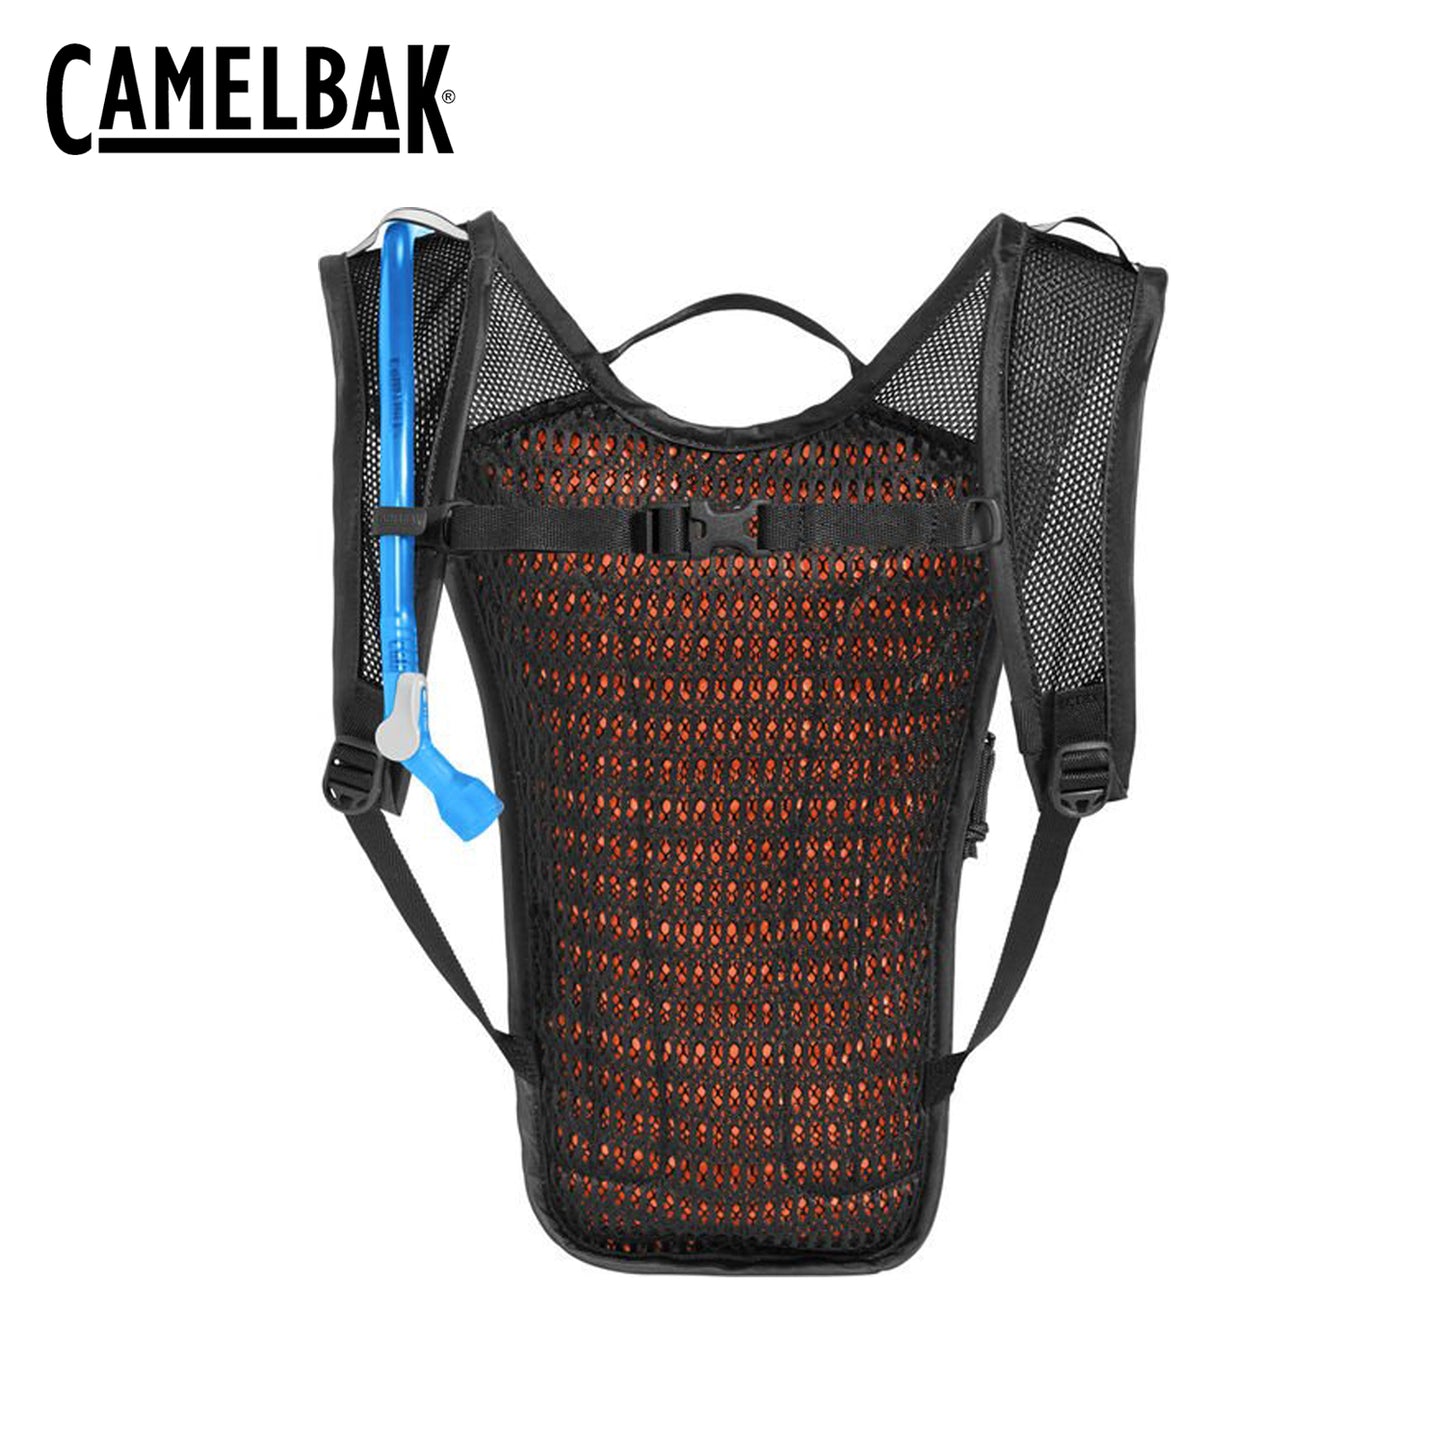 CamelBak Hydrobak Light 50oz Hydration Pack - Black/Silver